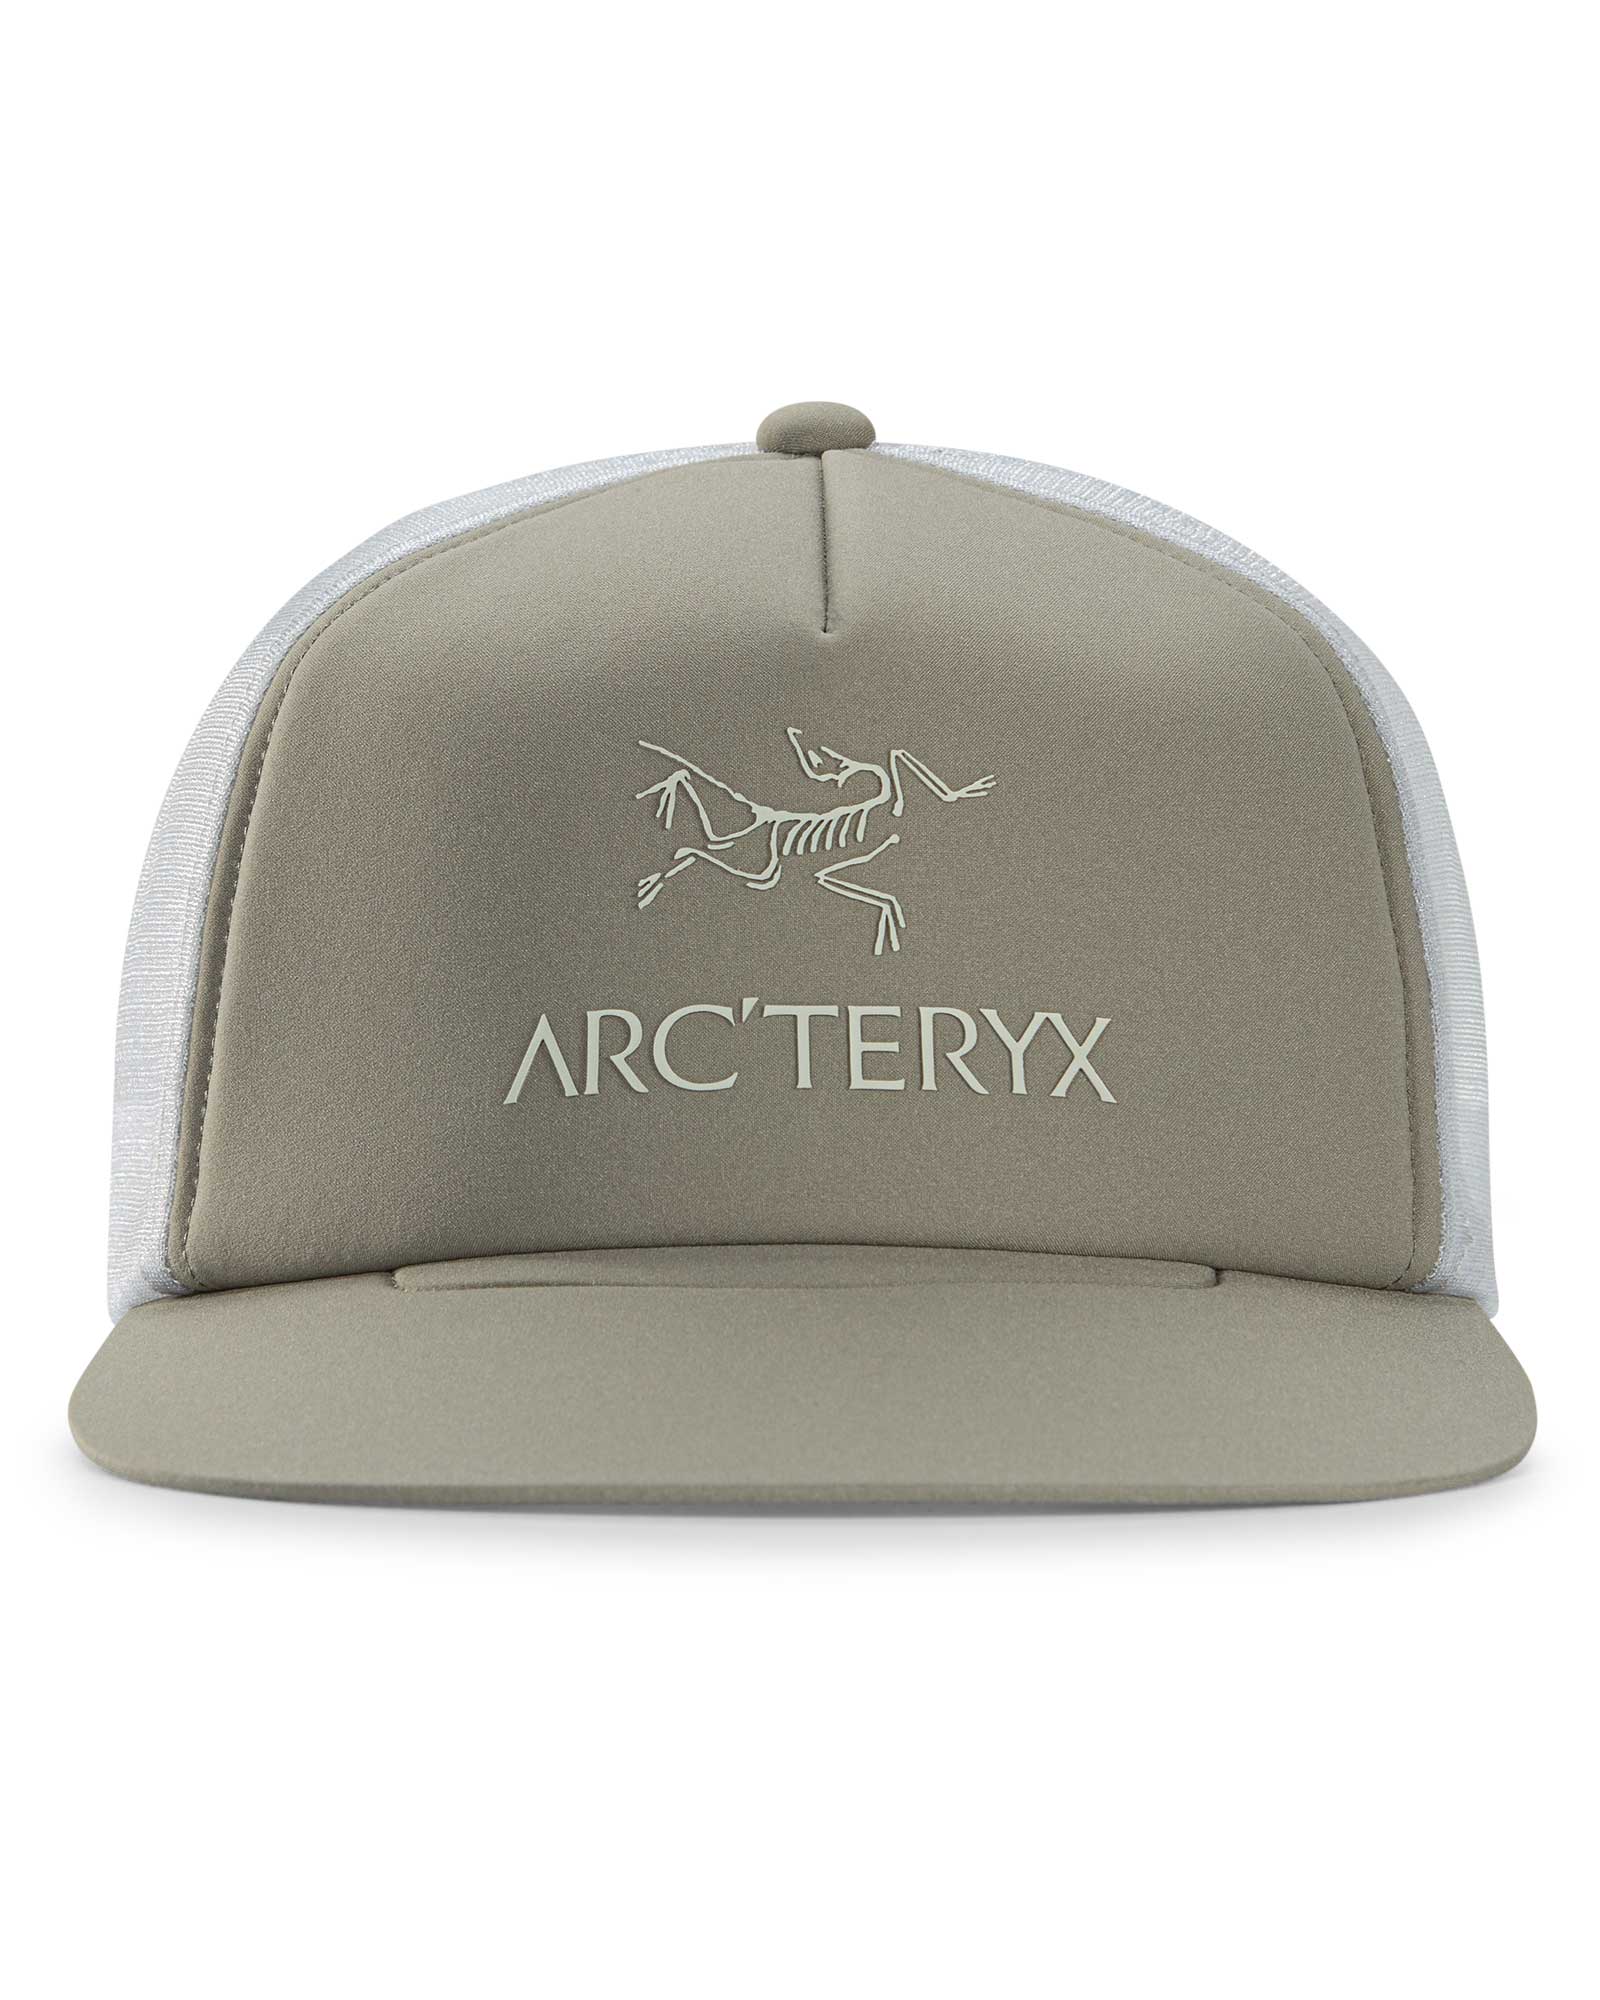 Arc’teryx Logo Trucker Hat - Forage